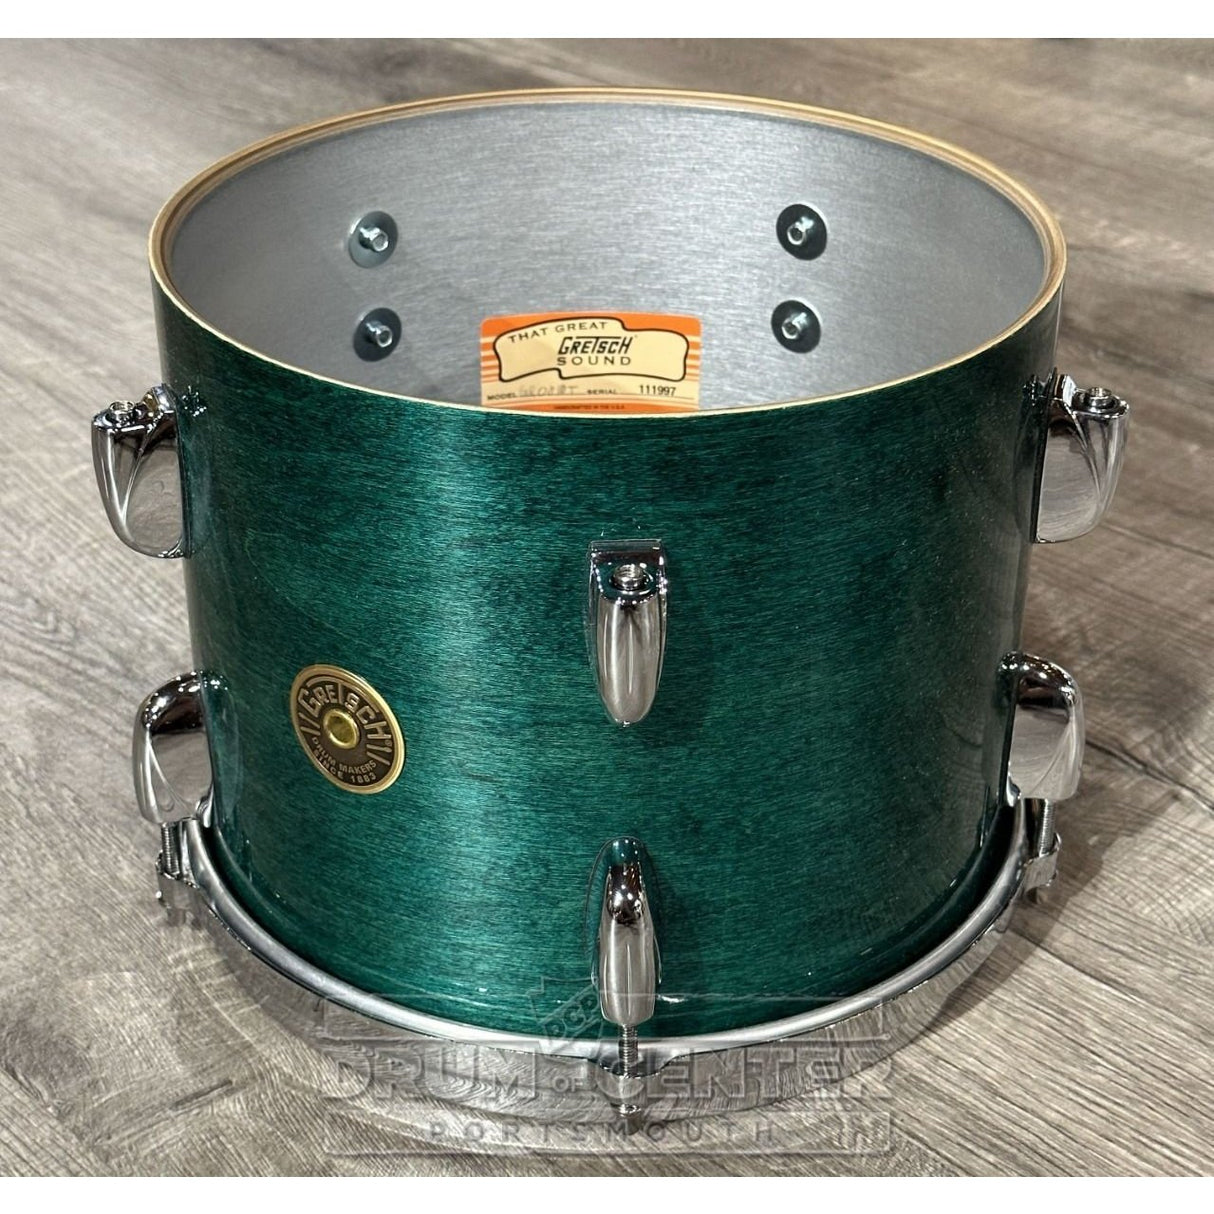 Gretsch USA Custom 5pc Drum Set Caribbean Blue Gloss